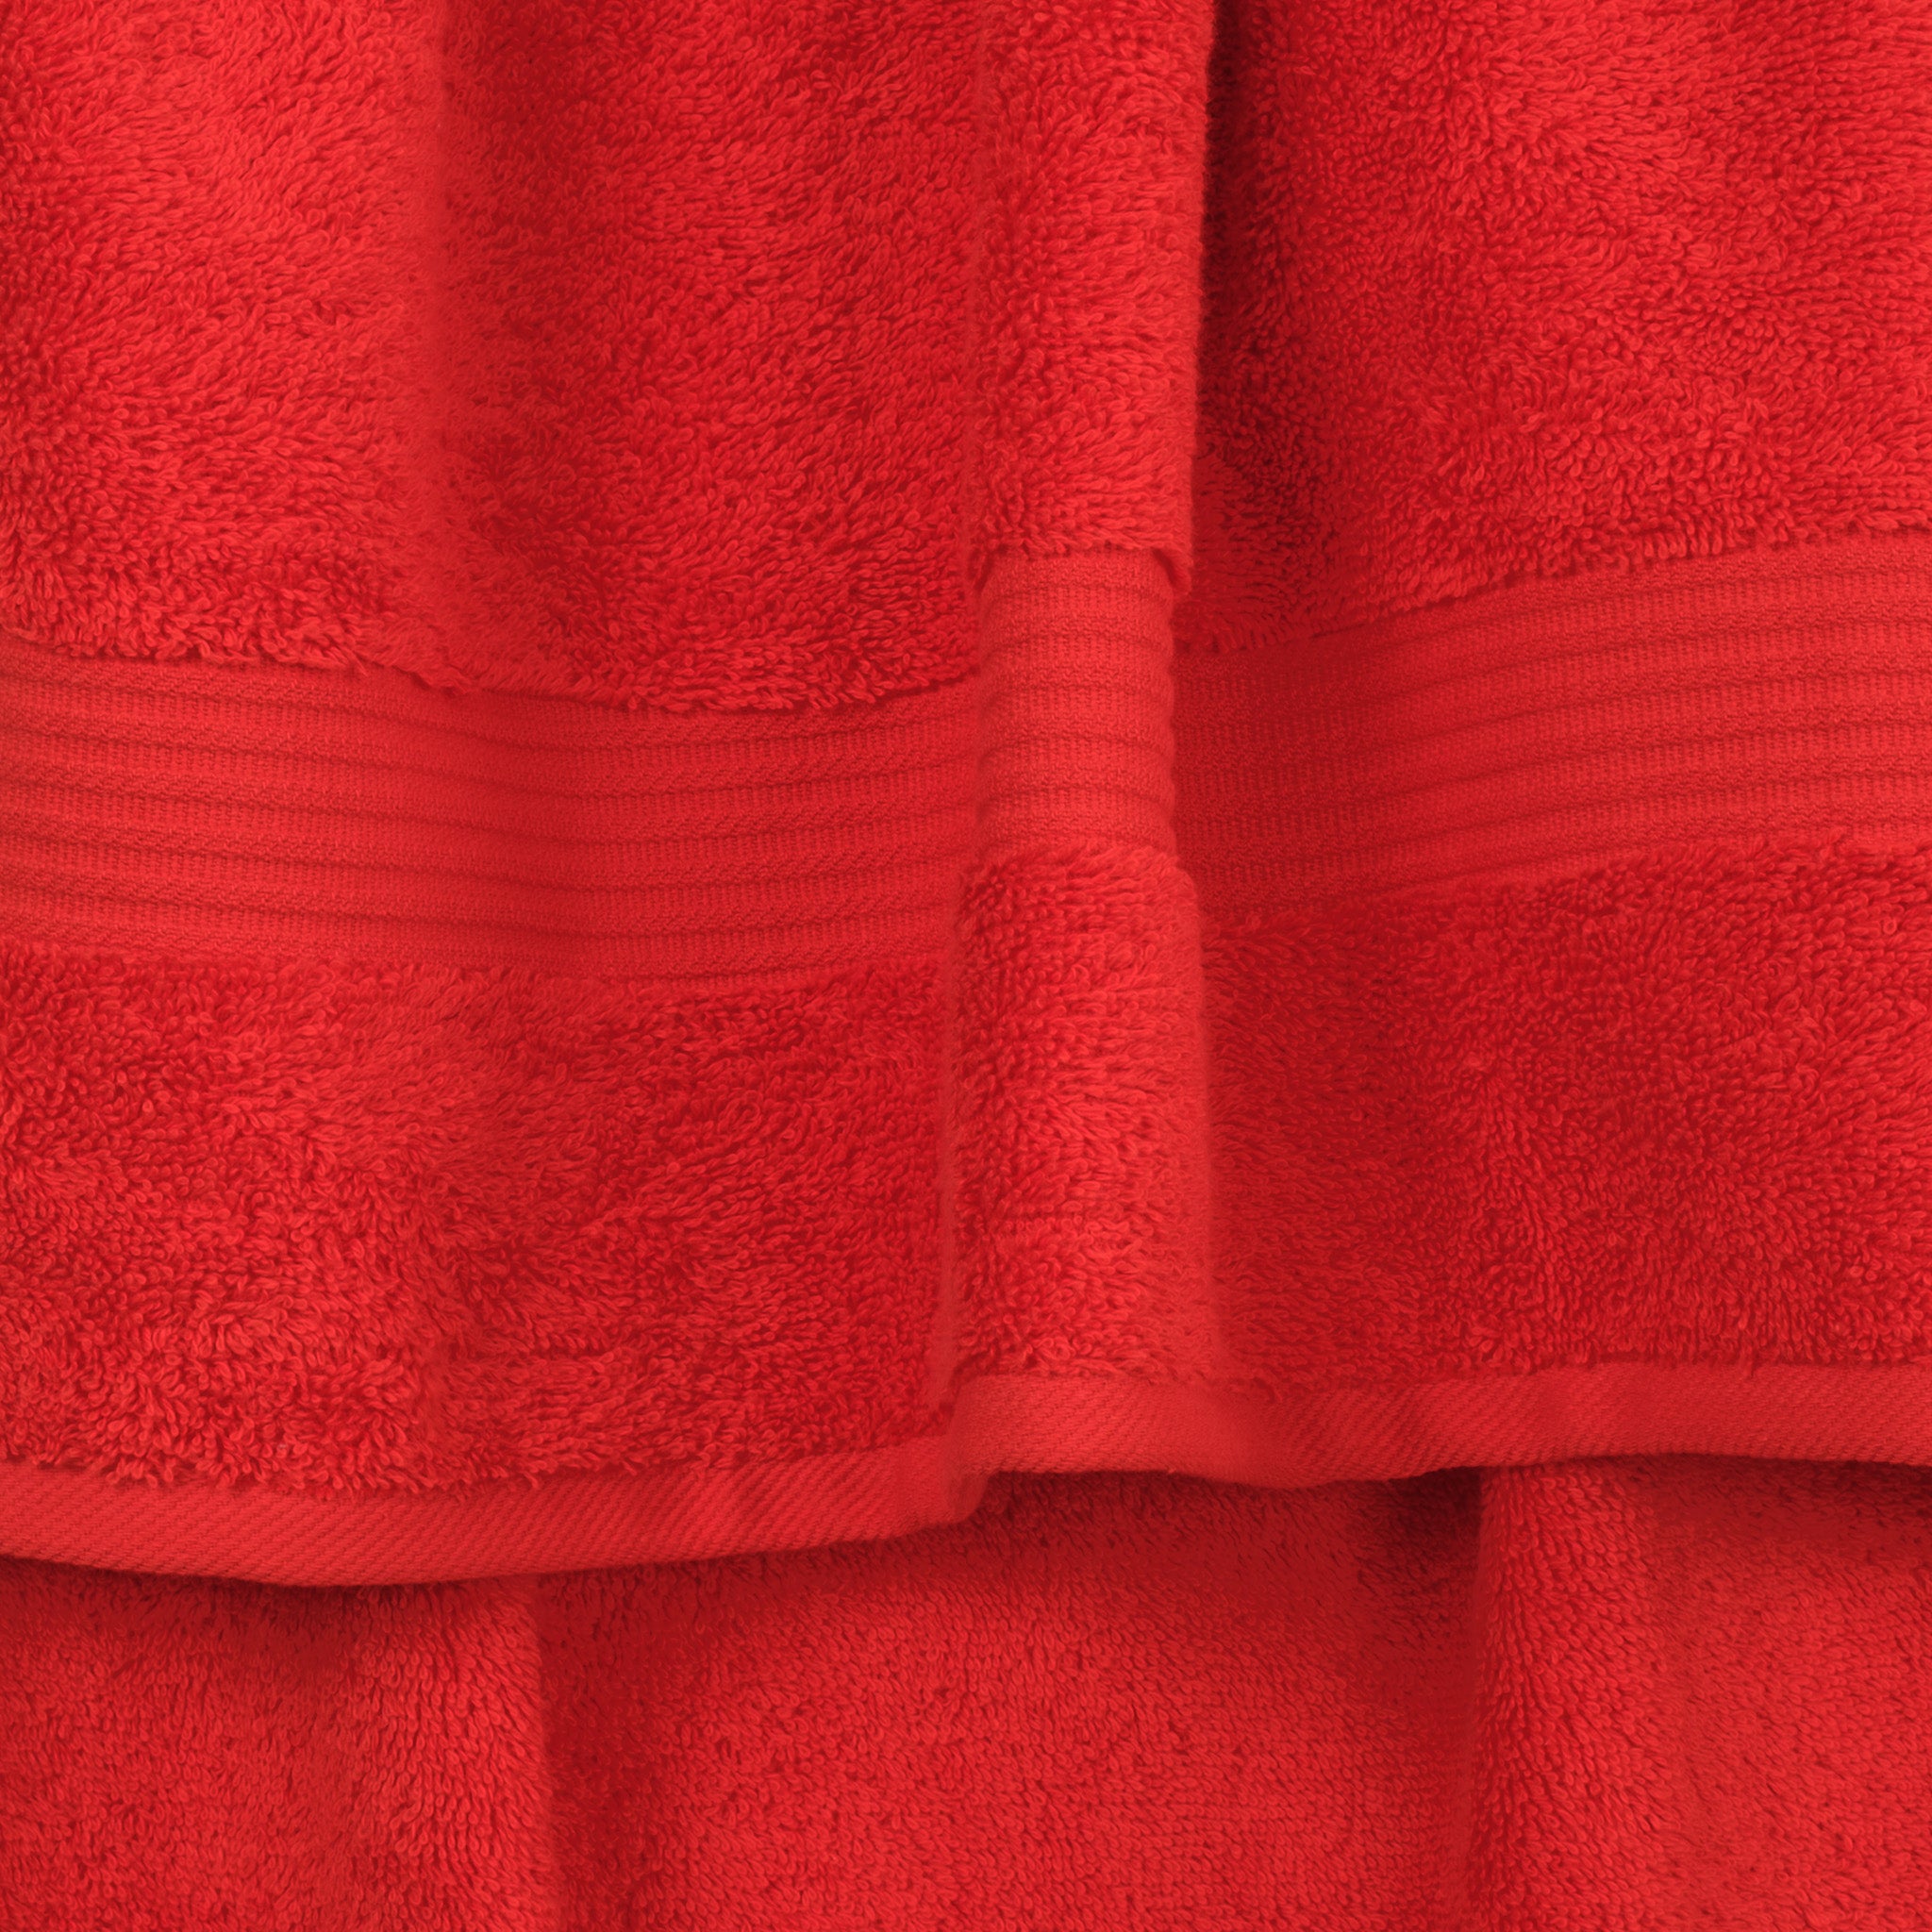 American Soft Linen Bekos 100% Cotton Turkish Towels, 4 Piece Washcloth Towel Set -red-04